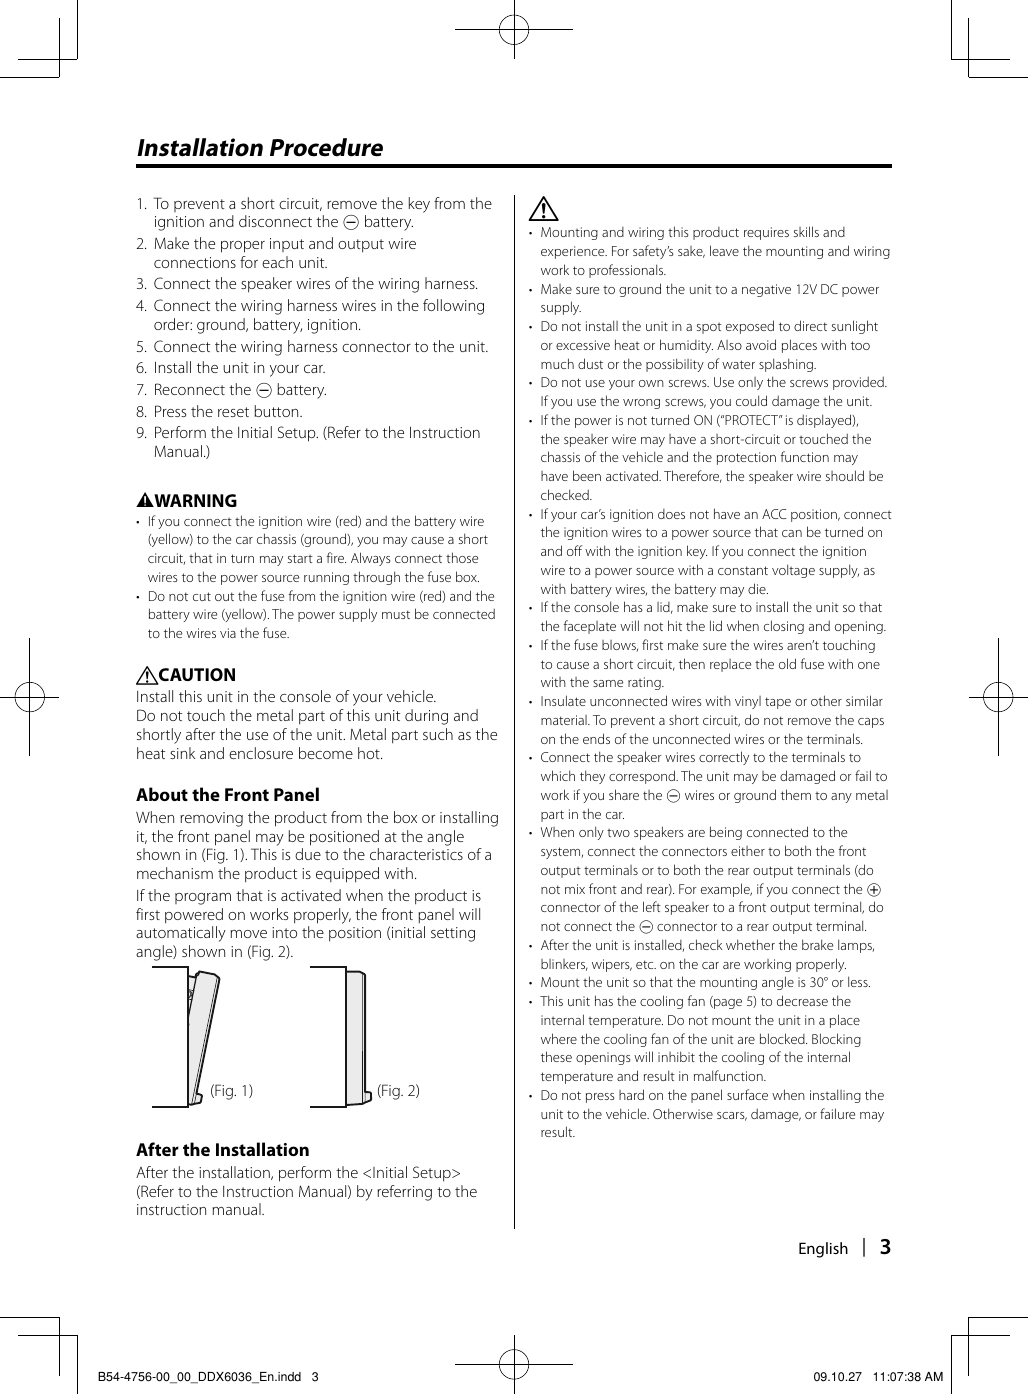 Page 3 of 12 - Kenwood Kenwood-Ddx6036-Users-Manual- B54-4756-00_00_DDX6036_En  Kenwood-ddx6036-users-manual